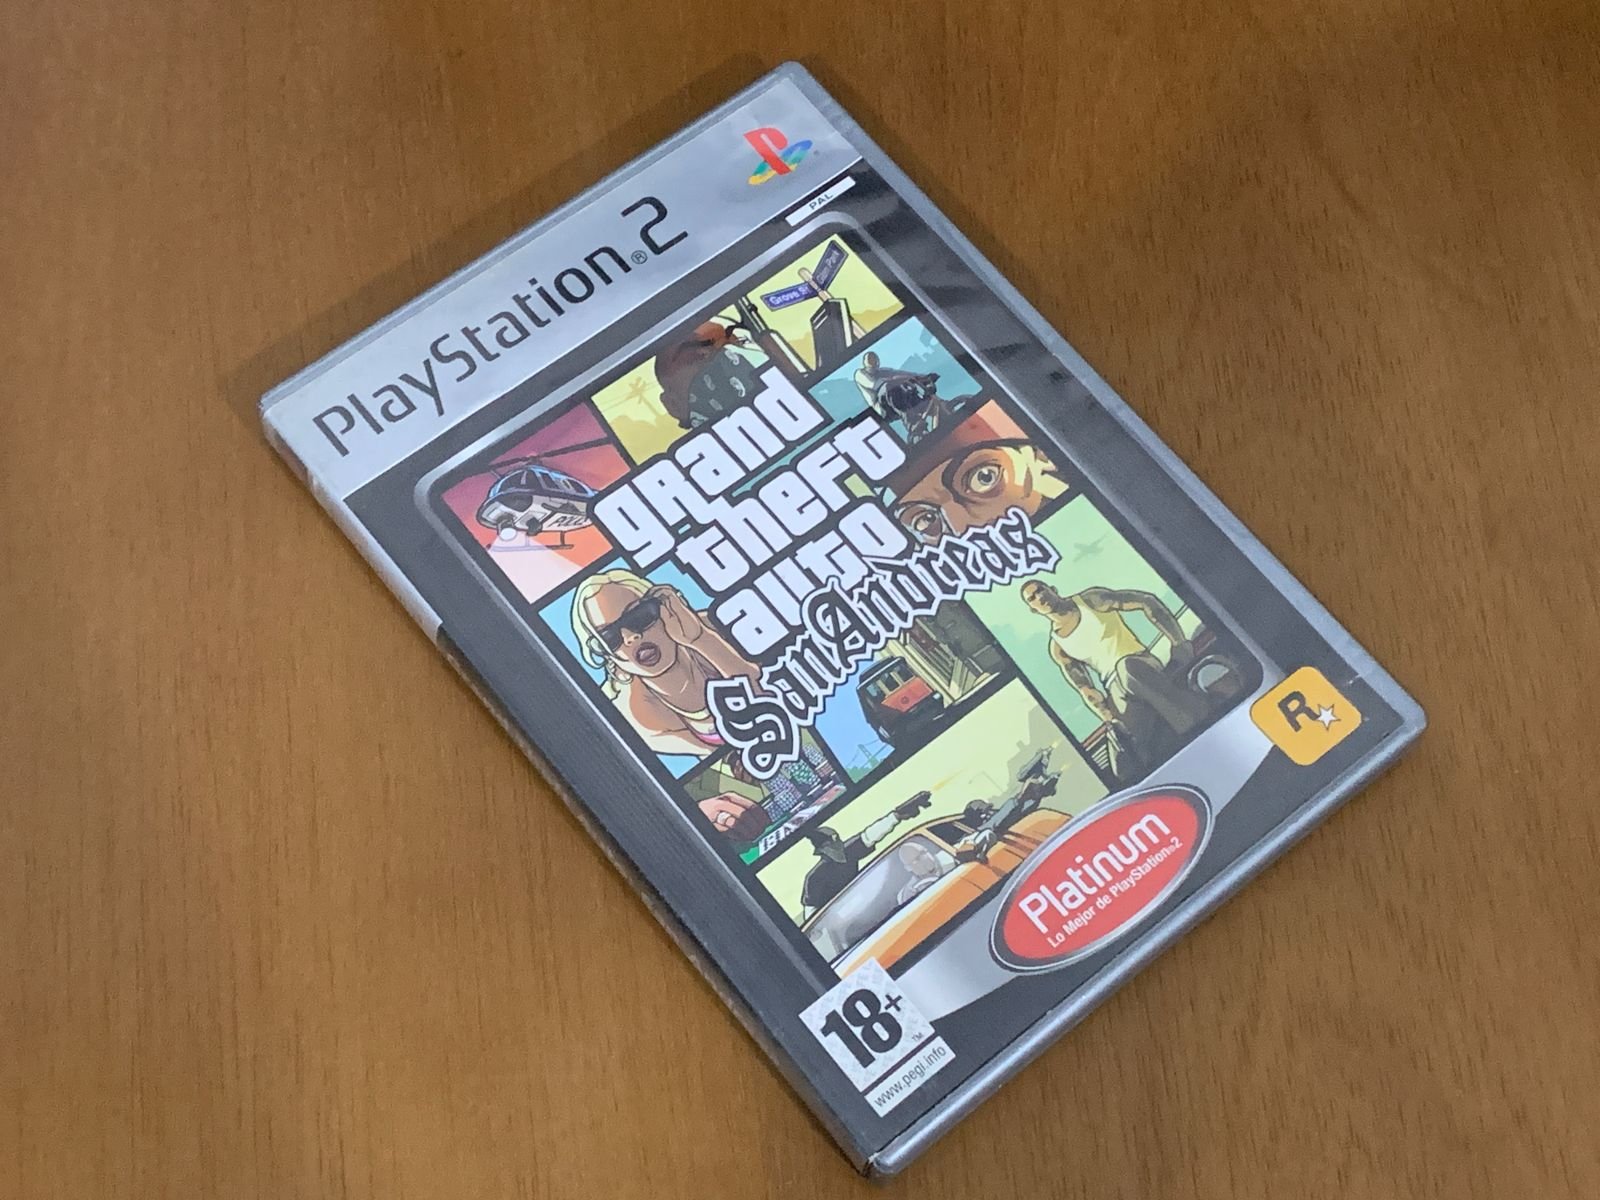 Gameteczone Usado Jogo PS2 Grand Theft Auto San Andreas - Rockstar